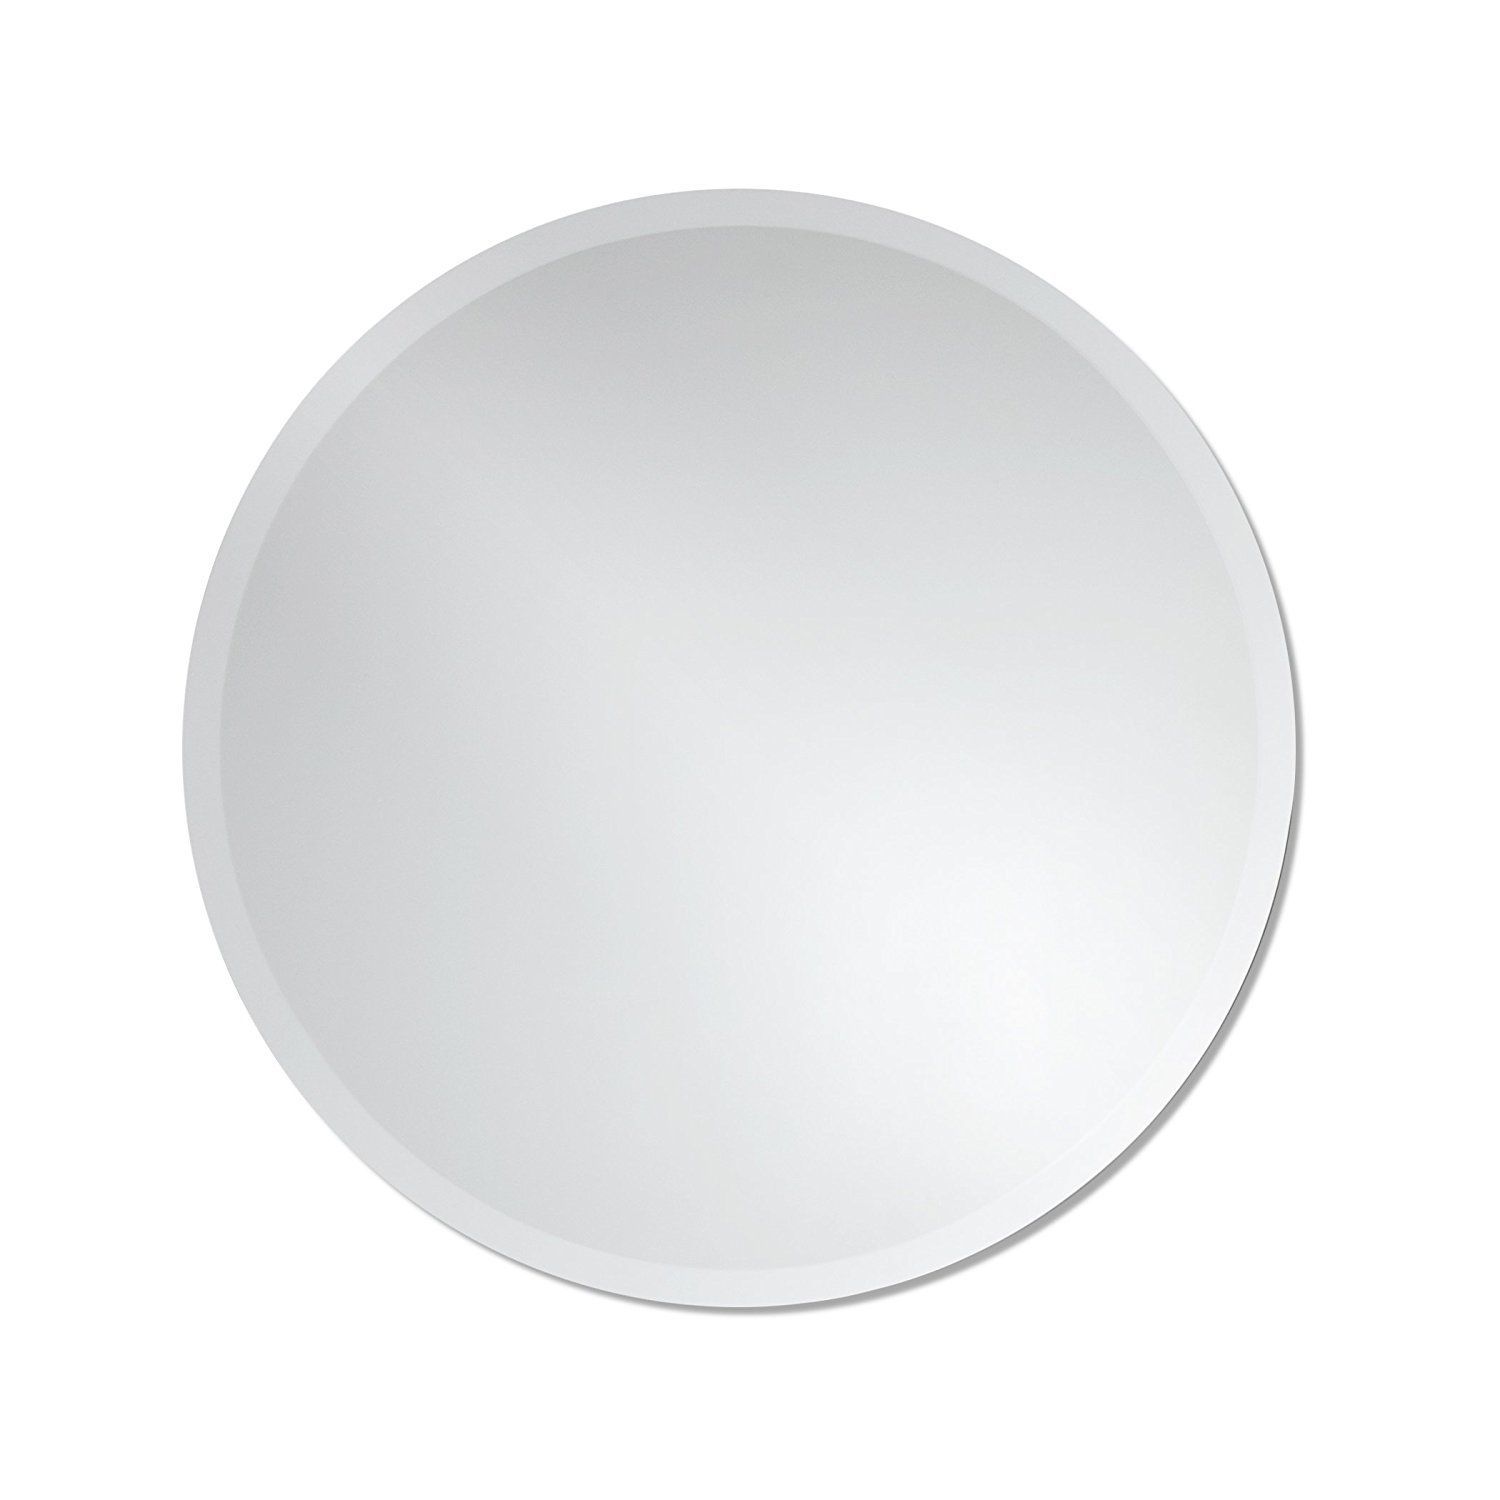 Amazon: Round Frameless Wall Mirror | Bathroom, Vanity, Bedroom Regarding Round Frameless Bathroom Wall Mirrors (View 9 of 15)